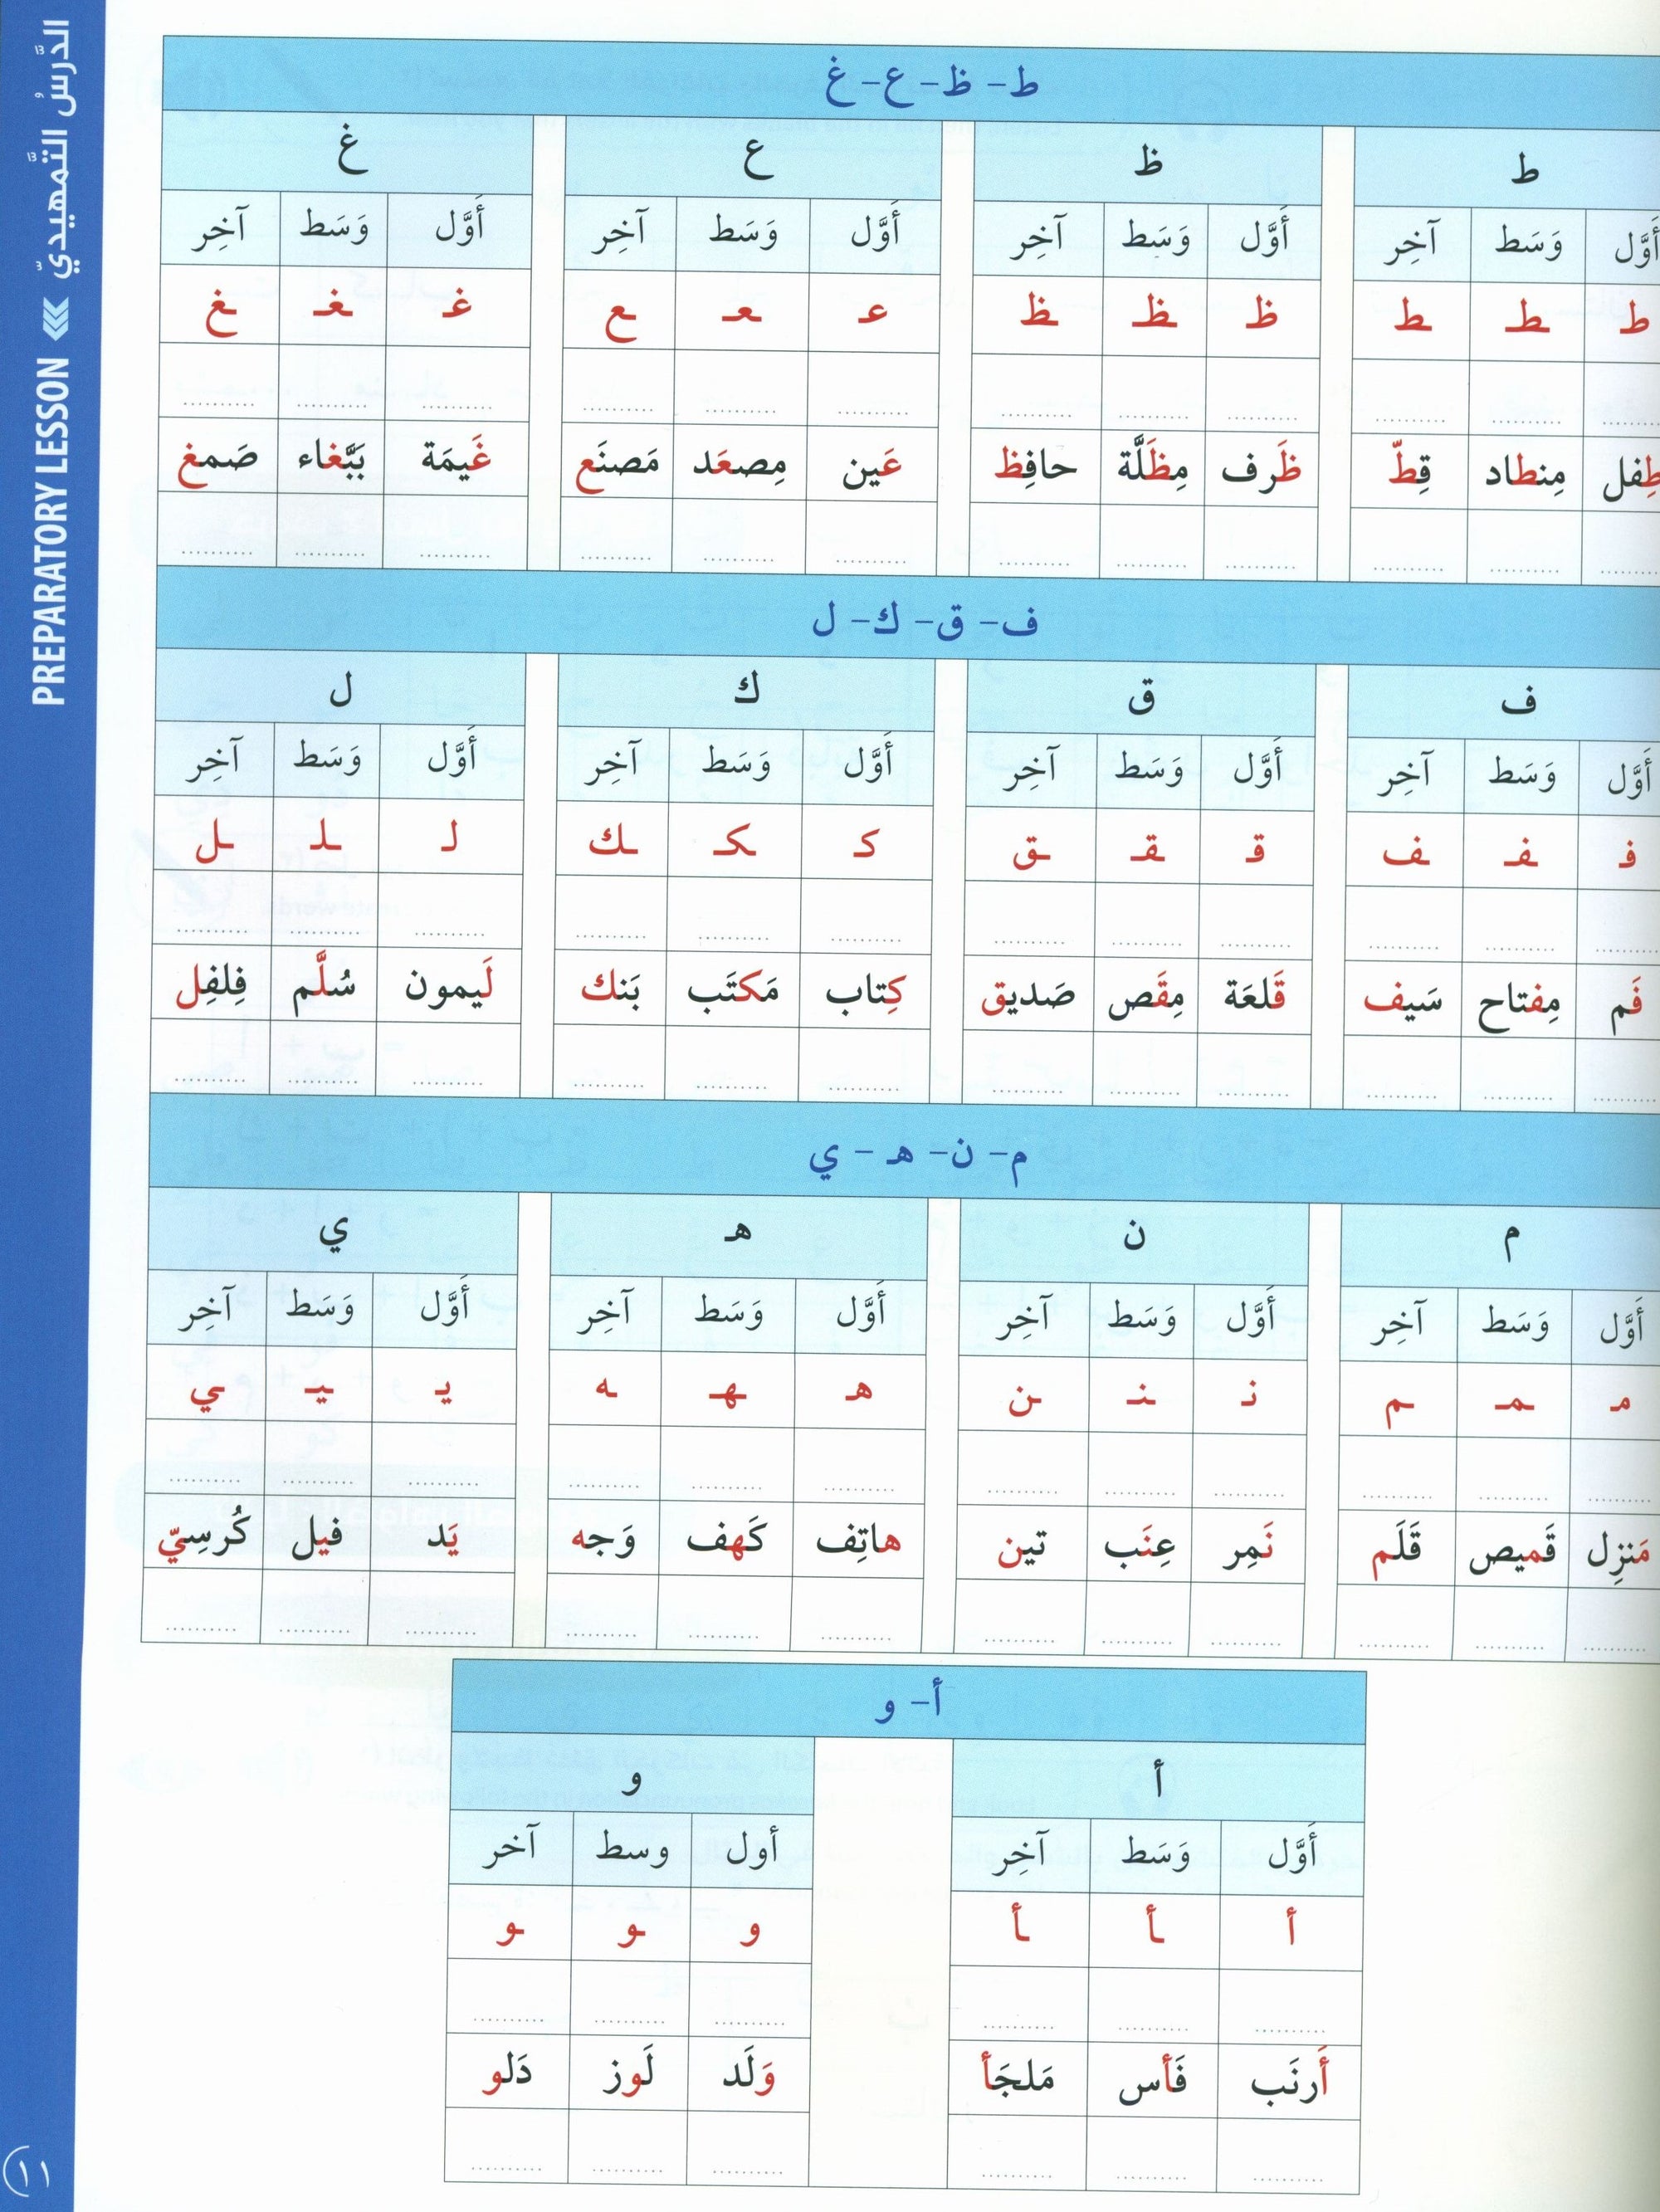 Key to Arabic - Starter Level